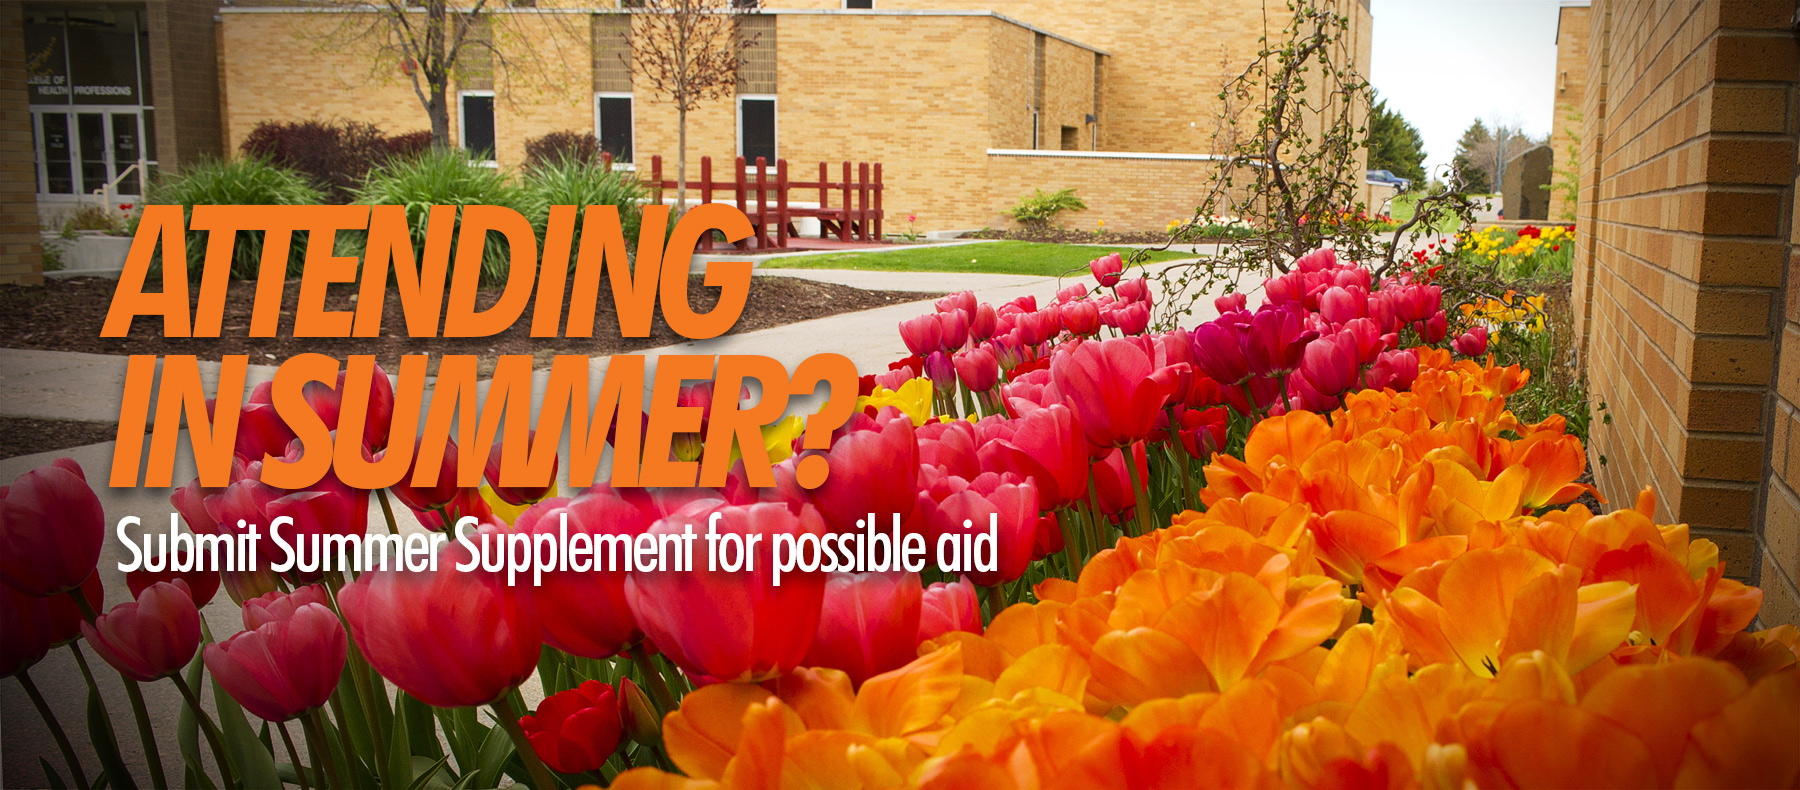 Summer flowers and ISU buildings